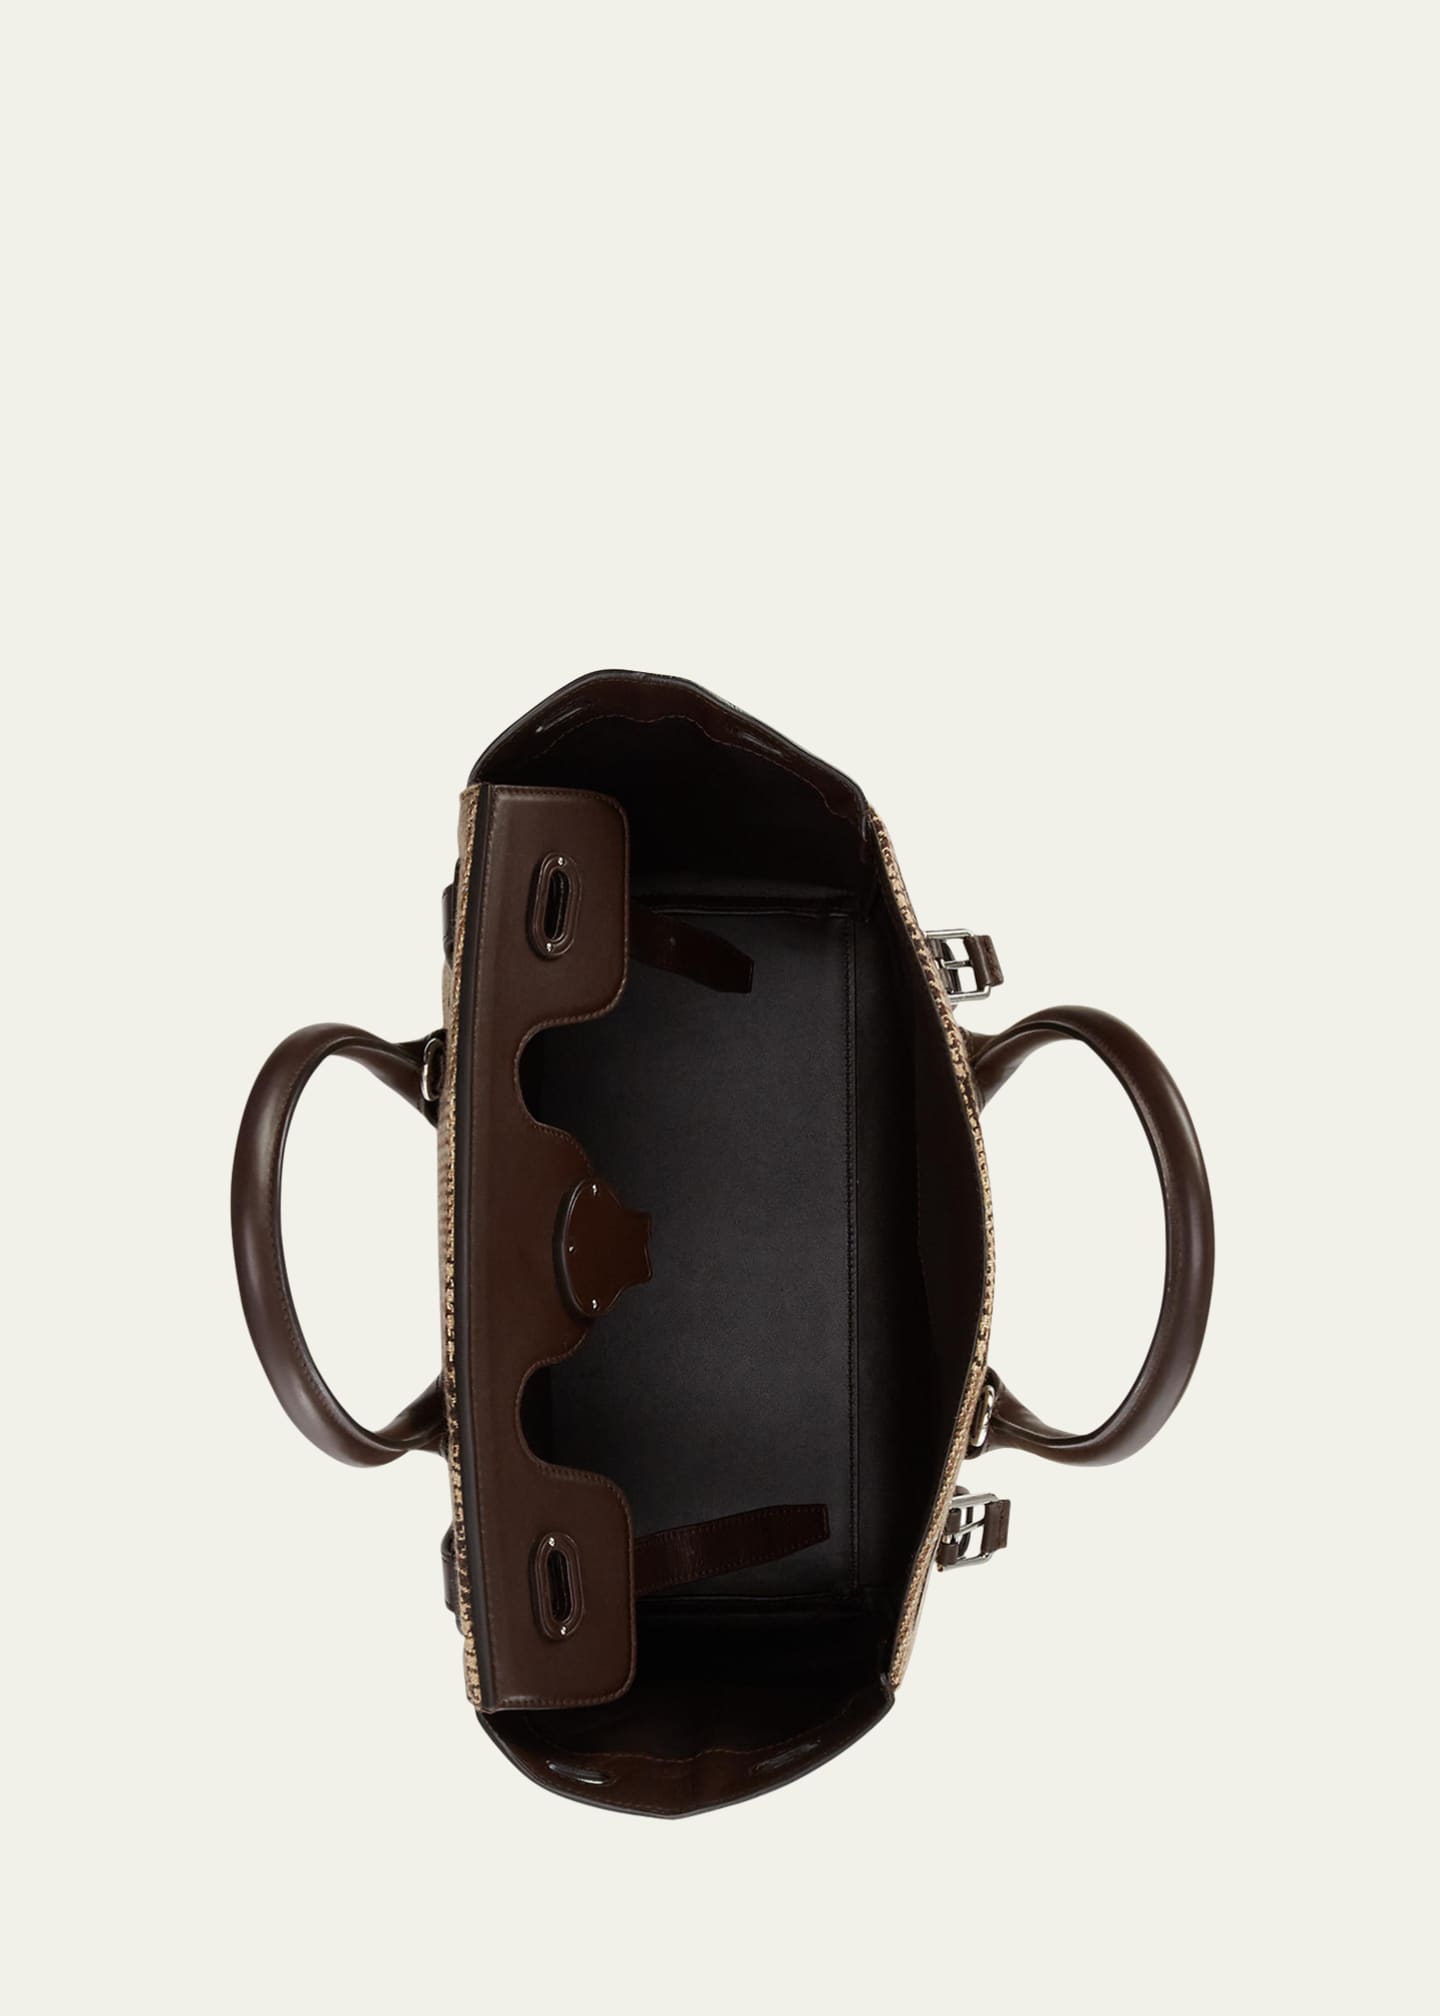 Ralph Lauren Ricky 33 Bicolor Leather Satchel Bag Whiteblack, $3,500, Bergdorf Goodman